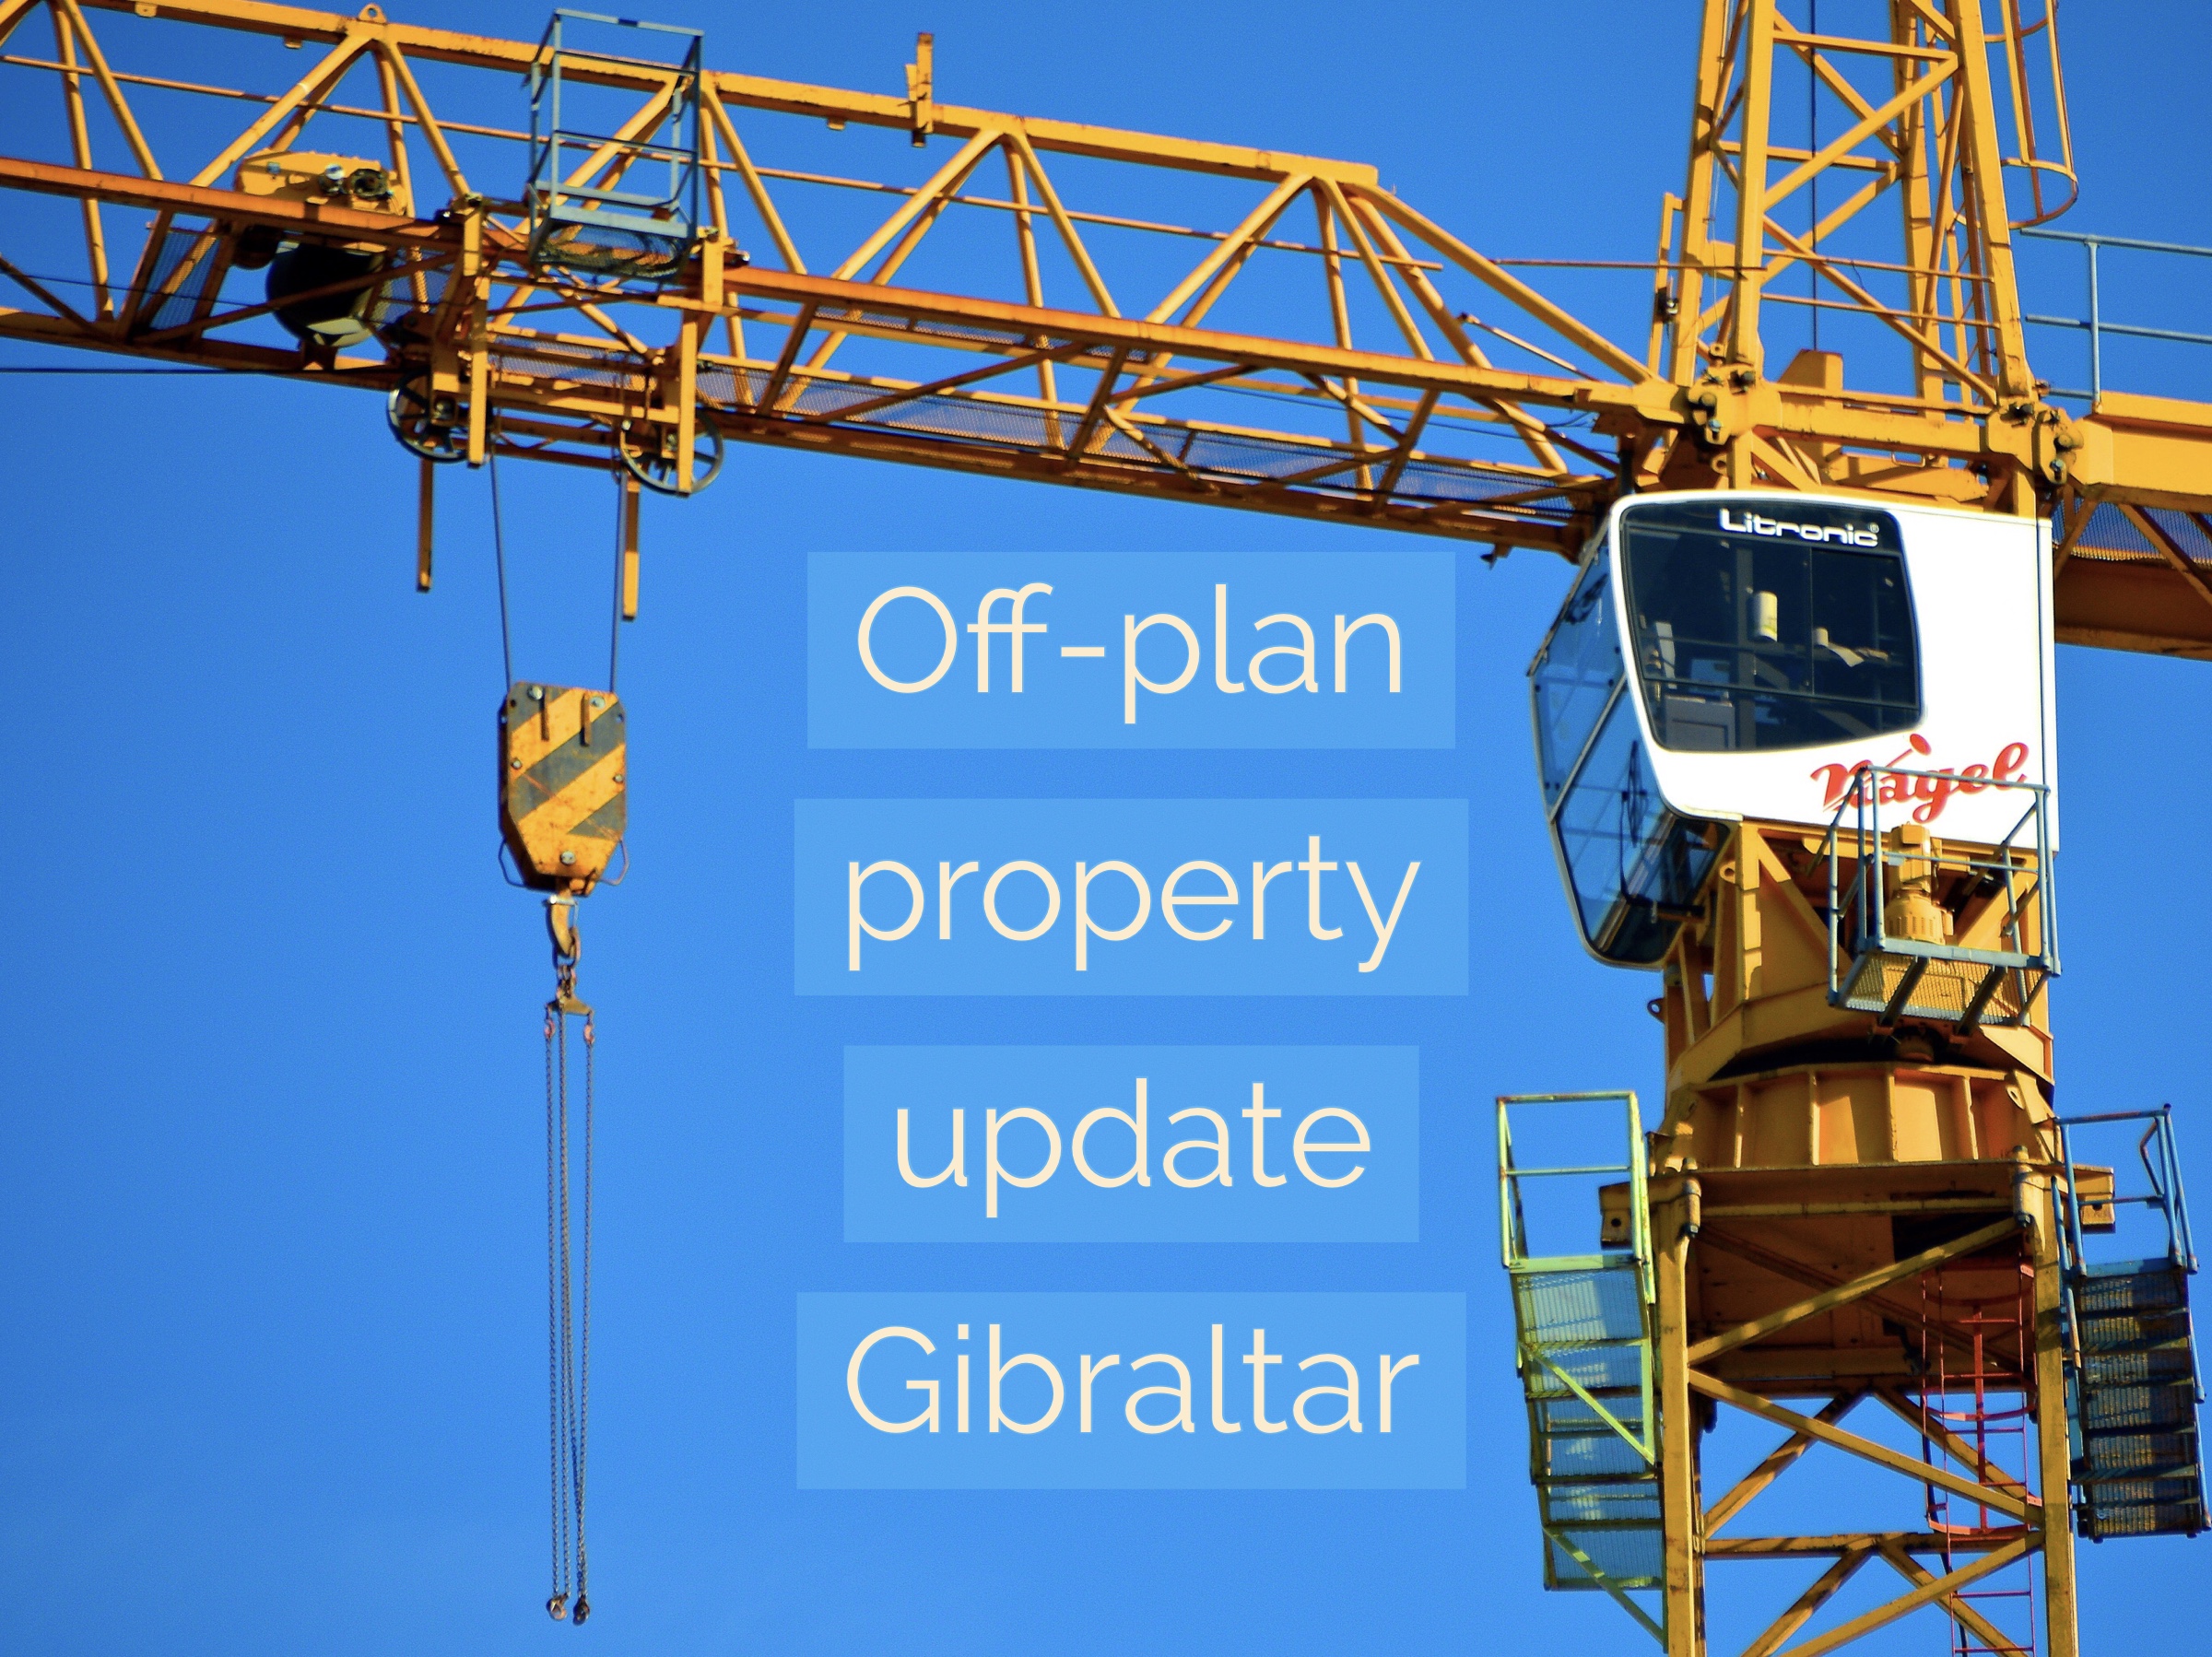 Gibraltar off-plan property update Image